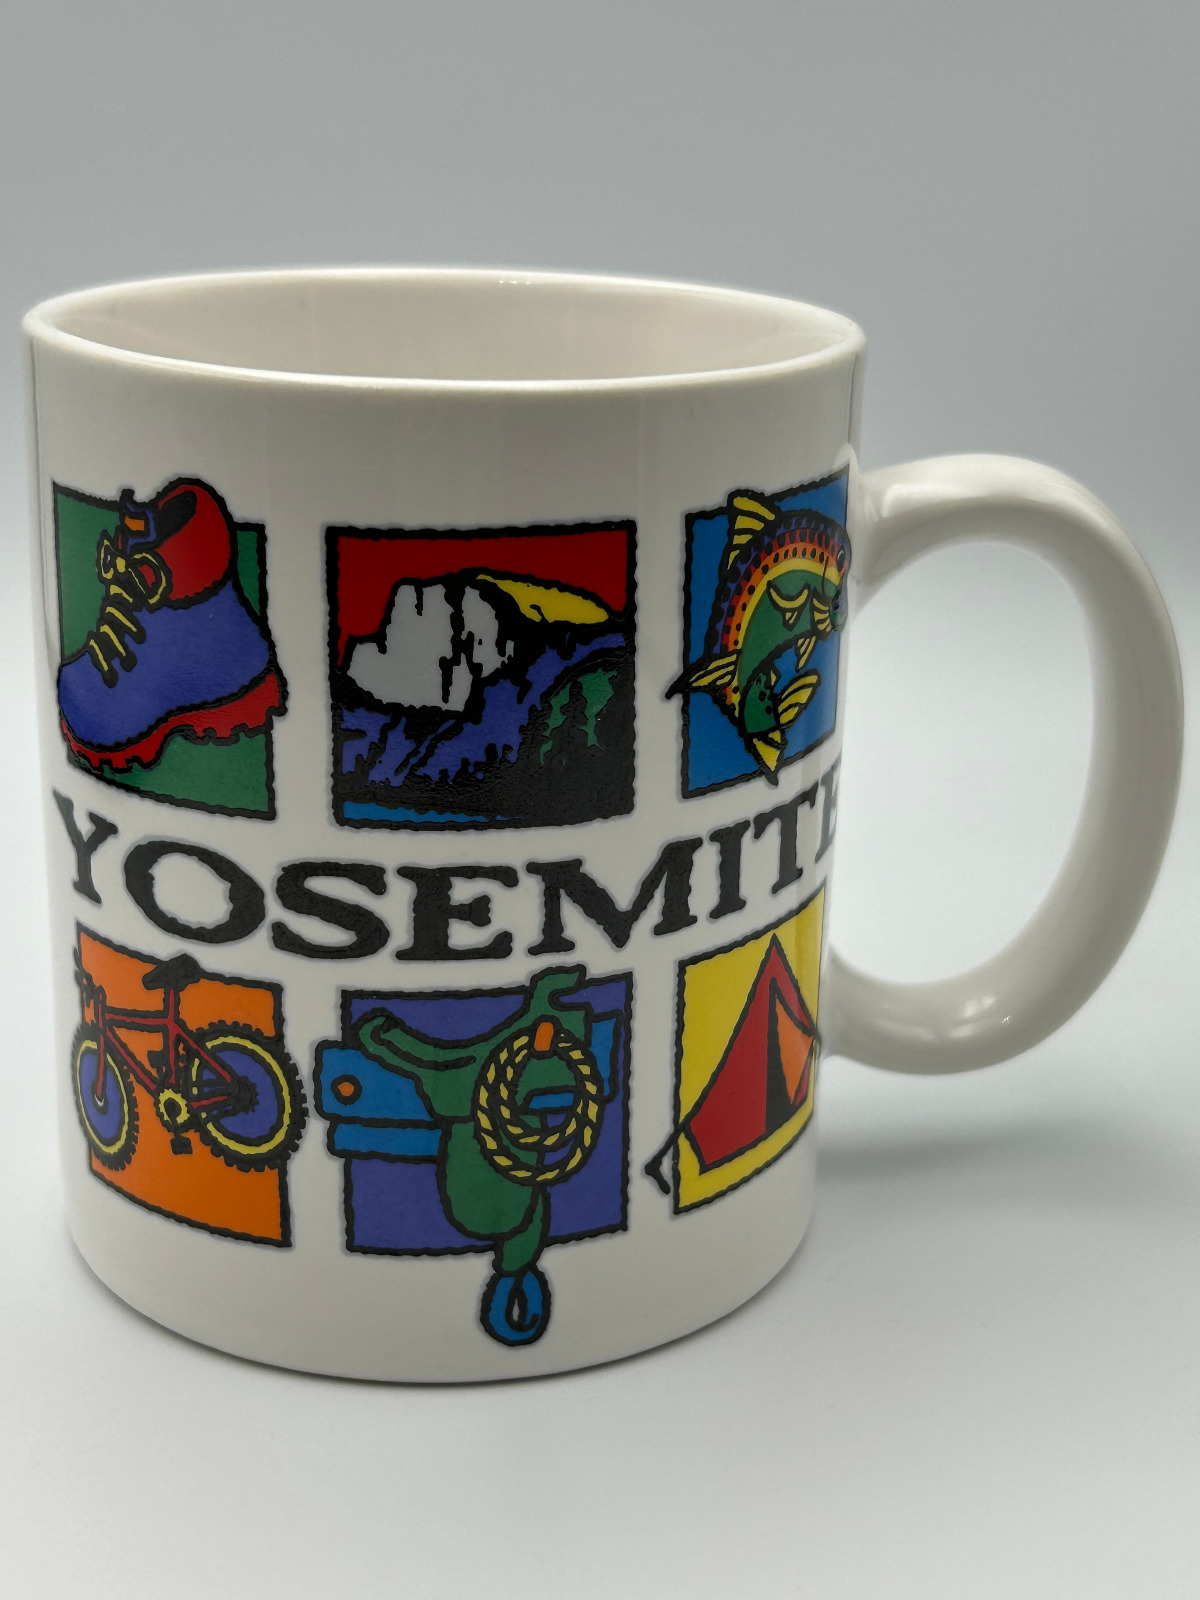 Vintage - 1980s Yosemite Park White Porcelain Mug - Made In USA